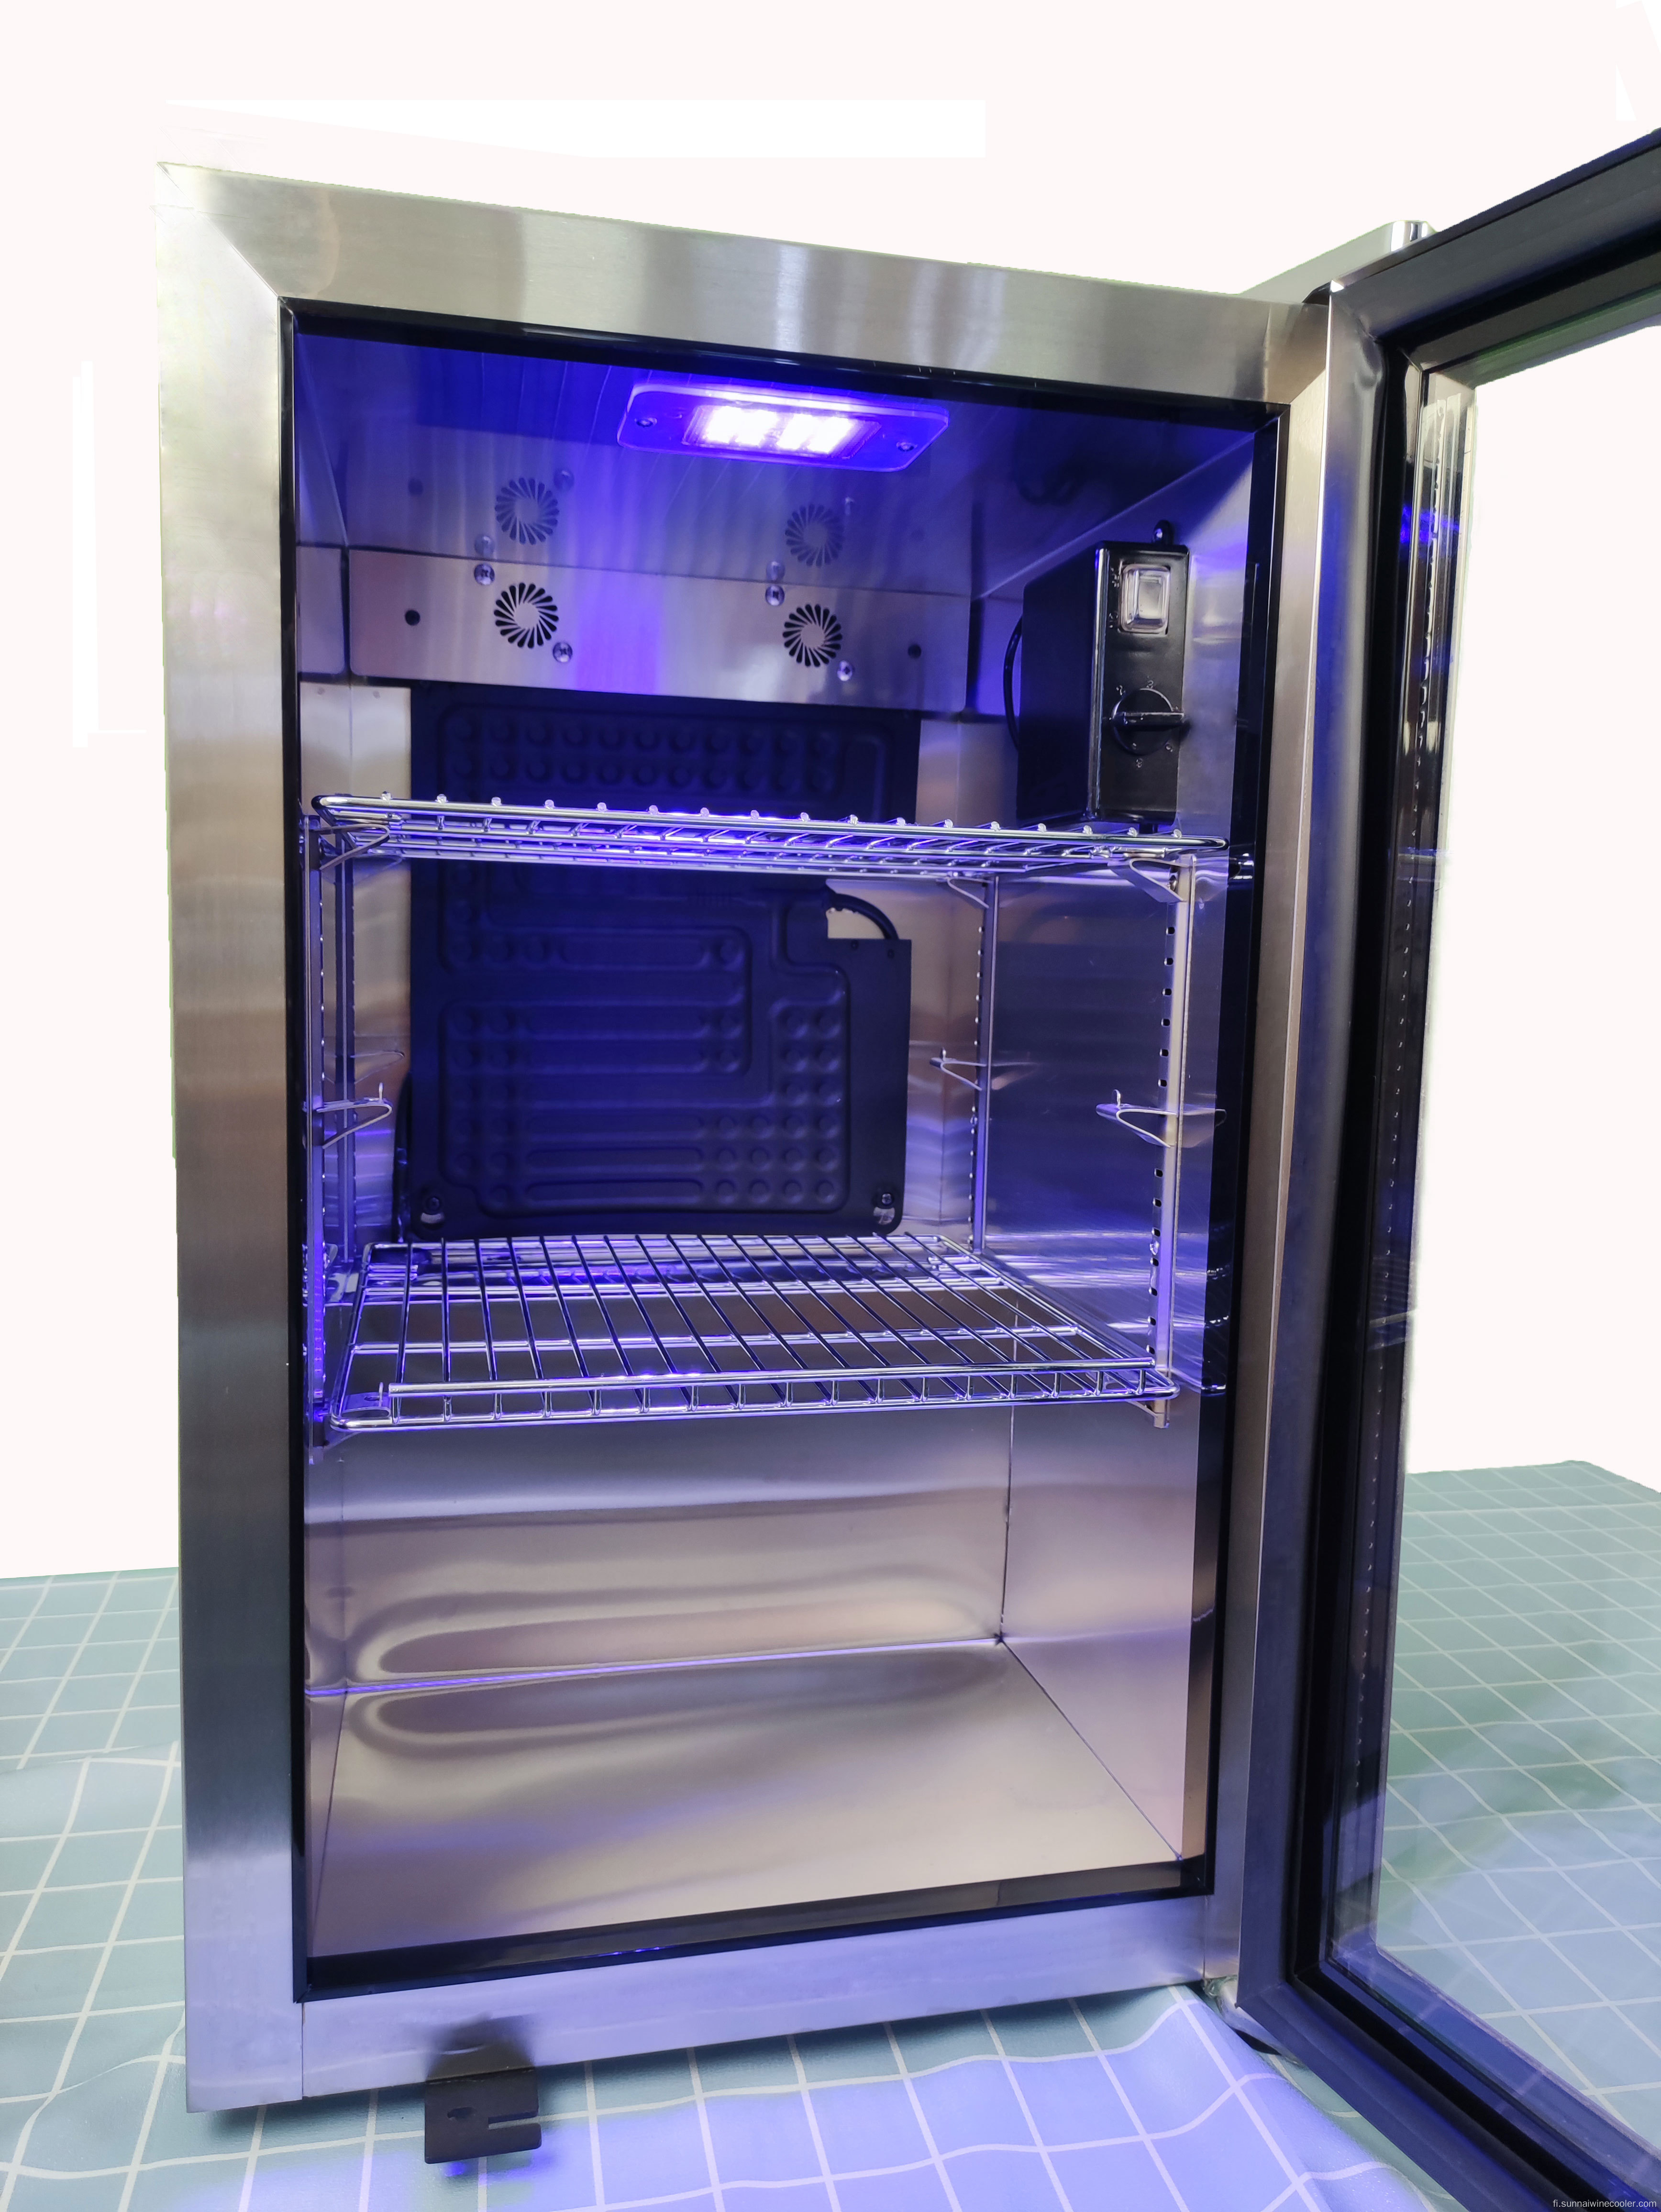 Kompressori Compact jääkaappi jääkaappi soodaolutta varten